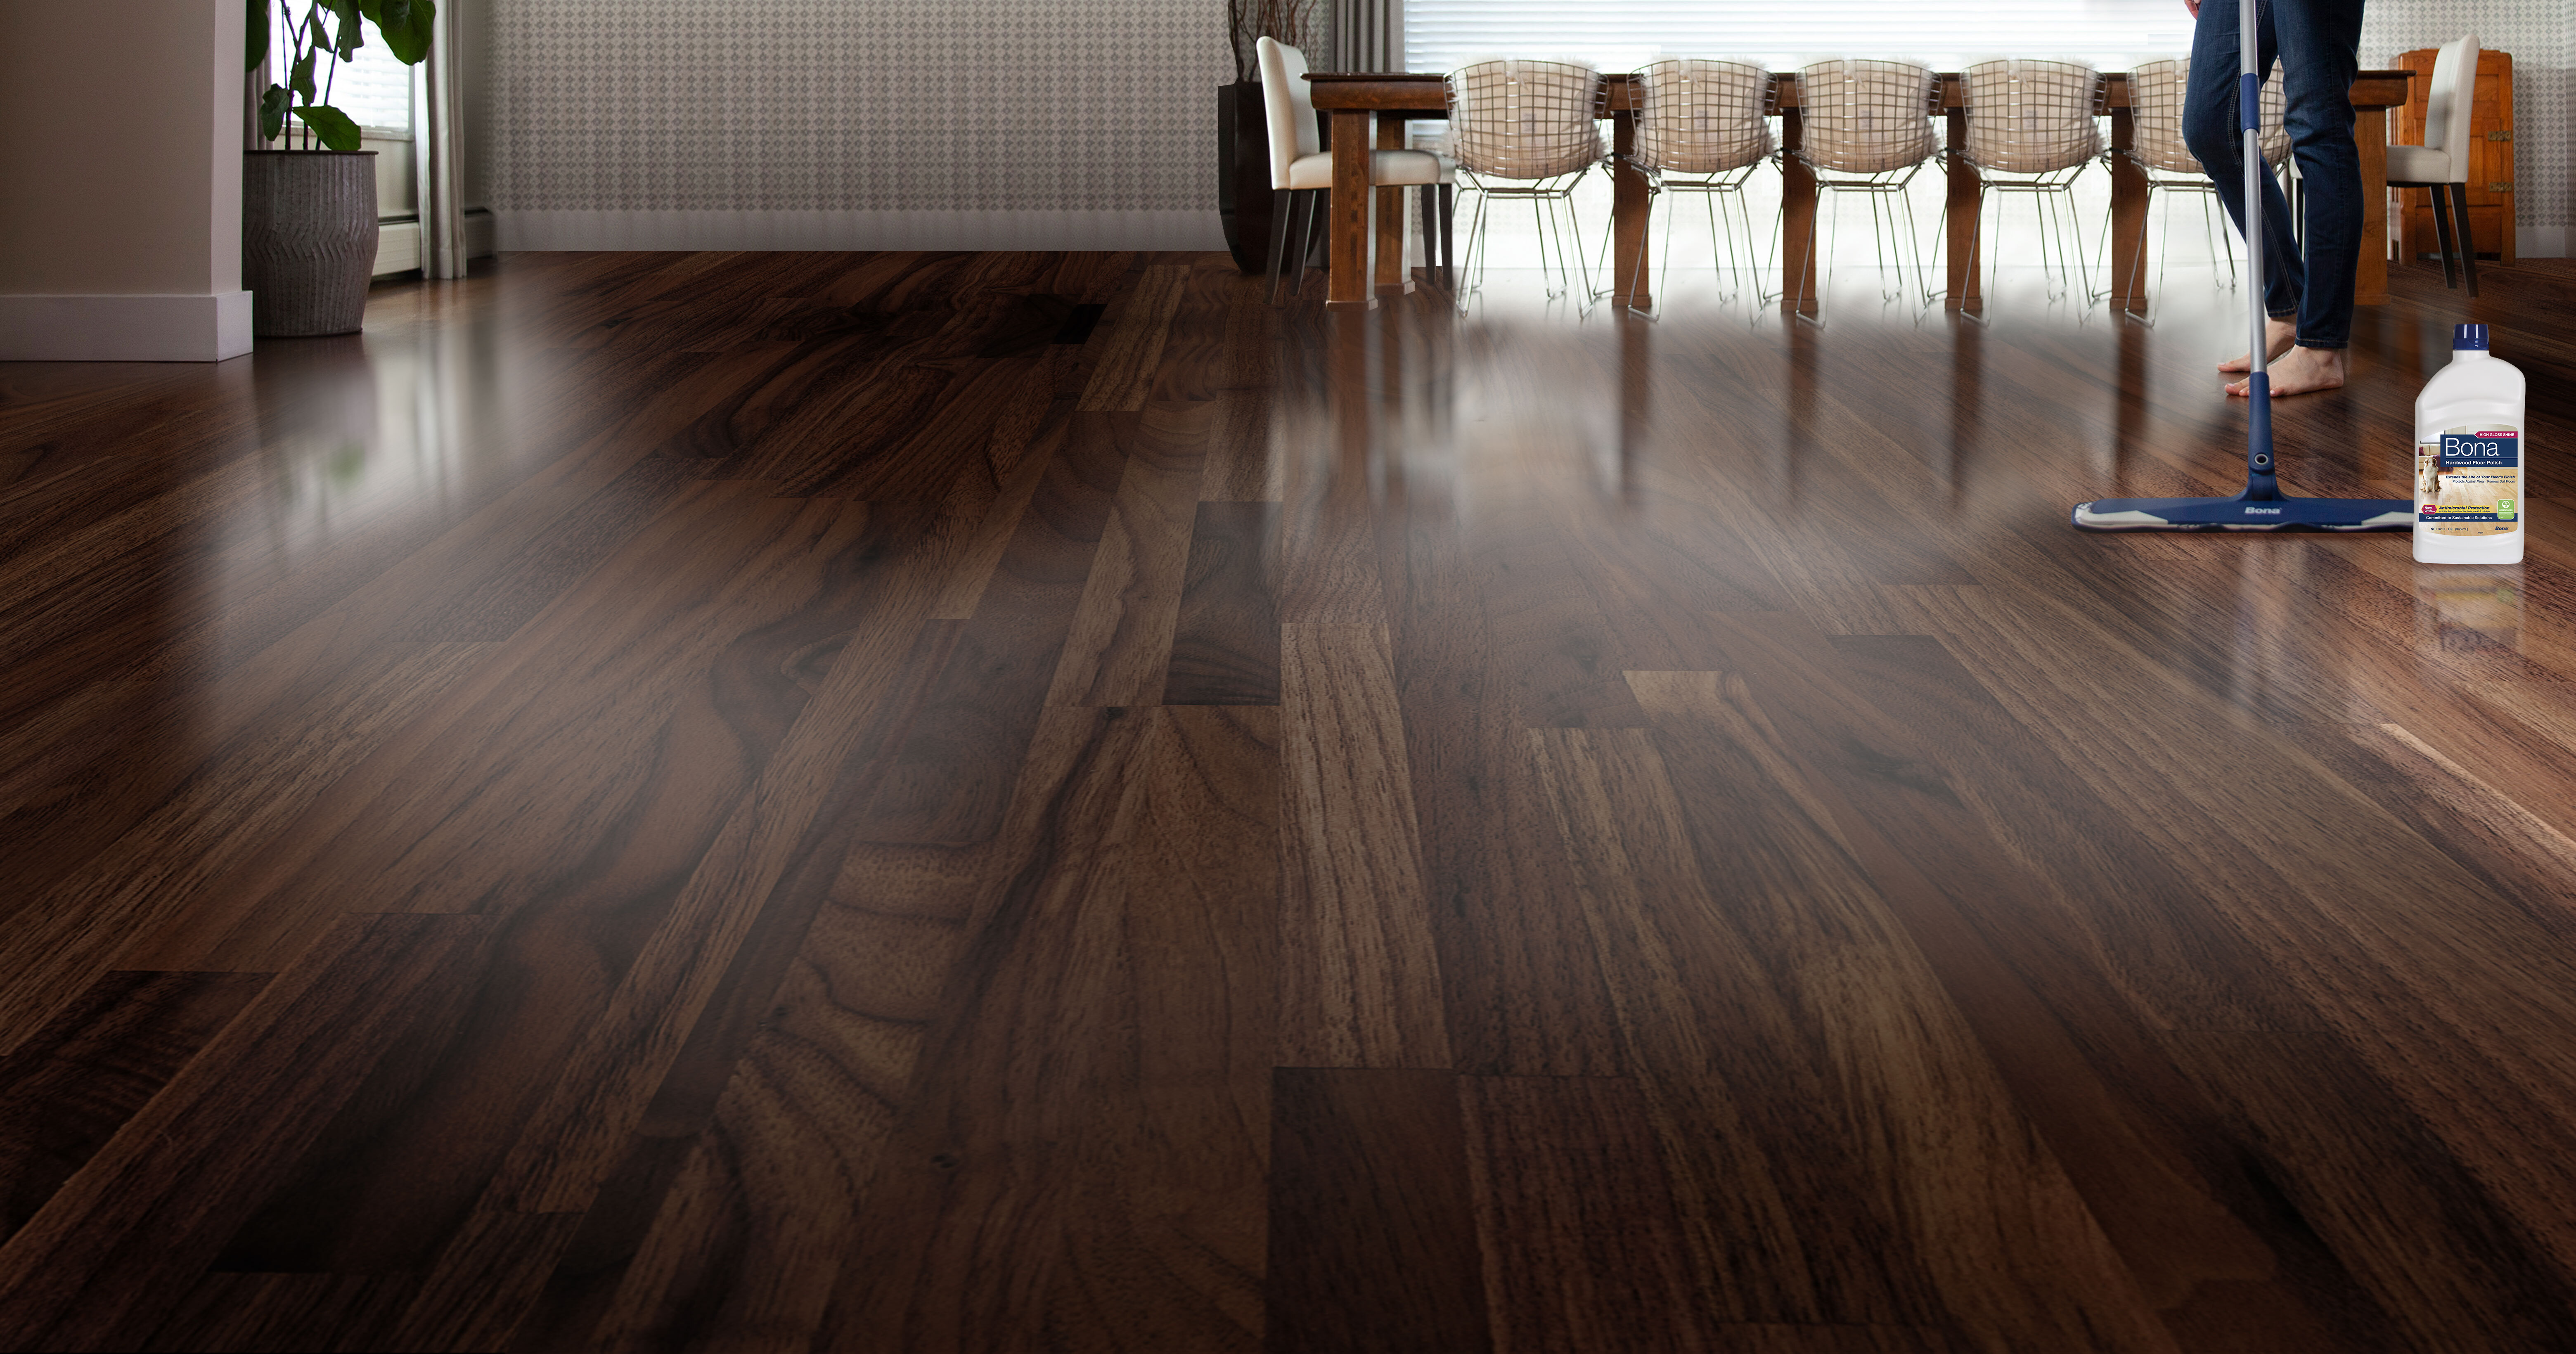 How To Polish Hardwood Floors Do S And, Can You Use Bona Hardwood Floor Polish On Laminate